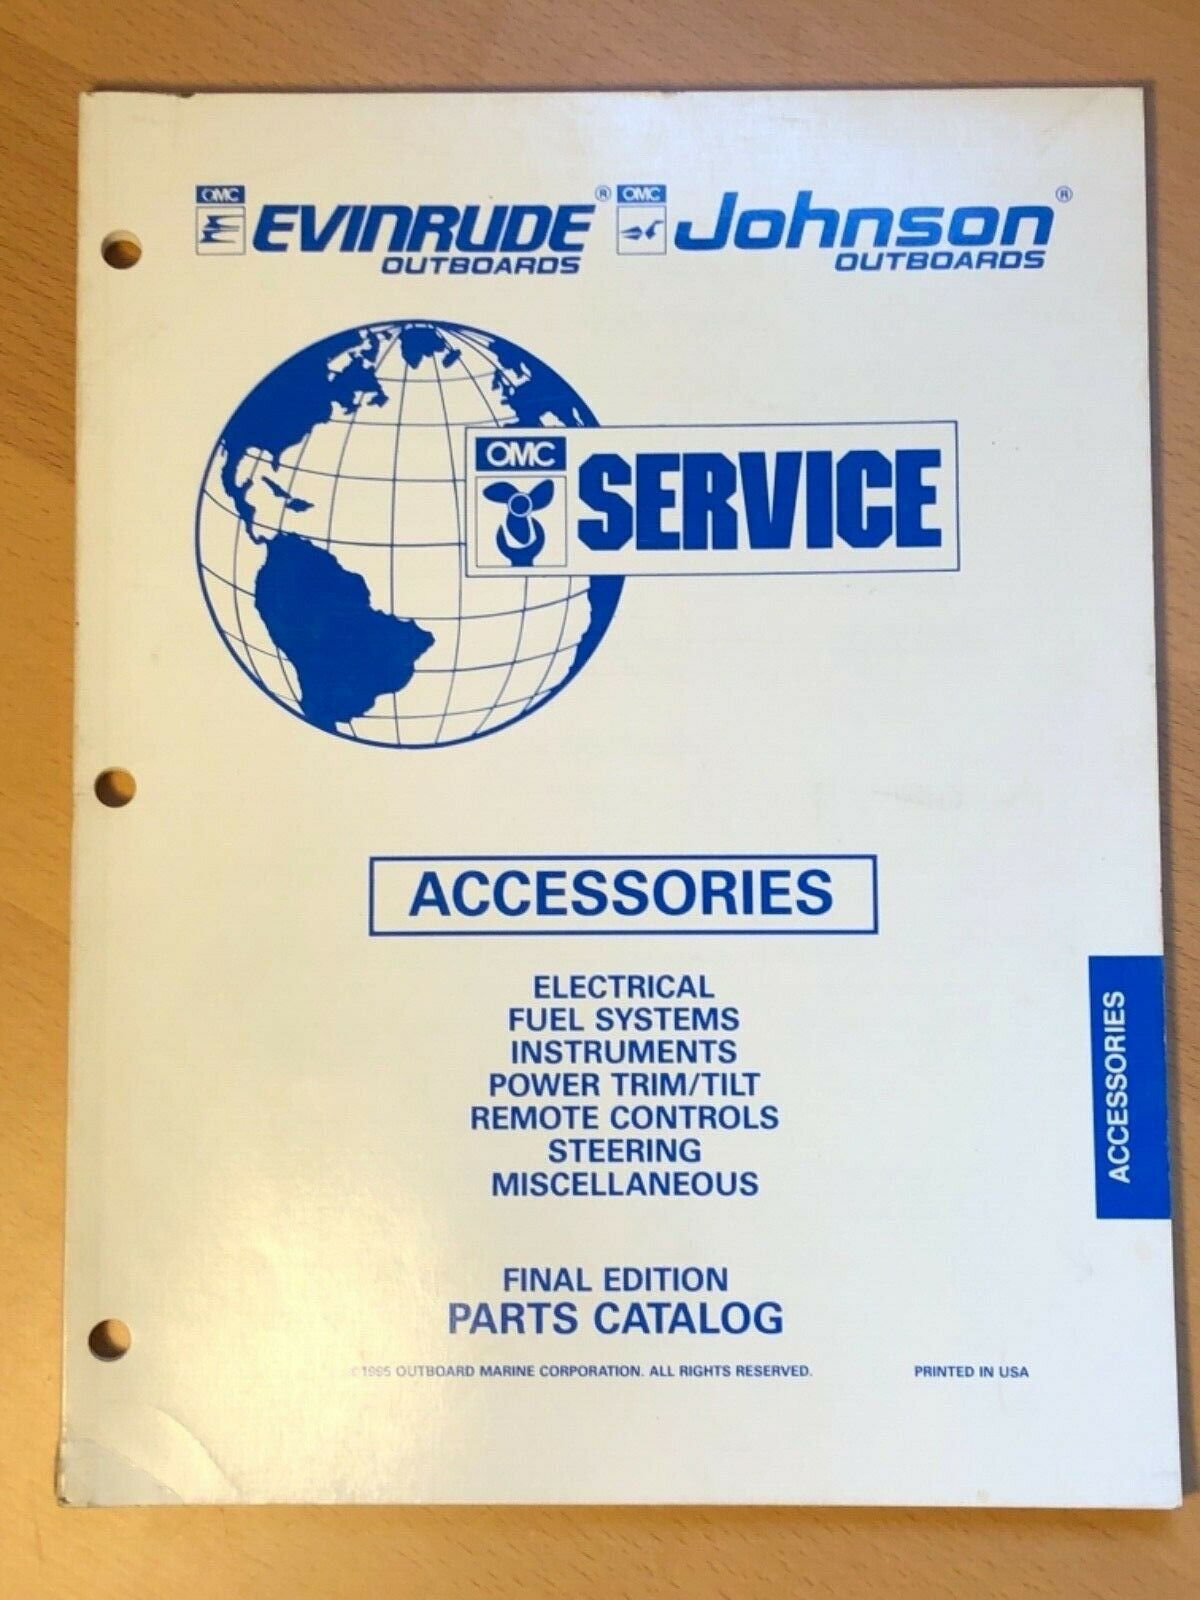 Evinrude Johnson Outboard Motor Accessories Parts Catalog Manual 1995 Omc